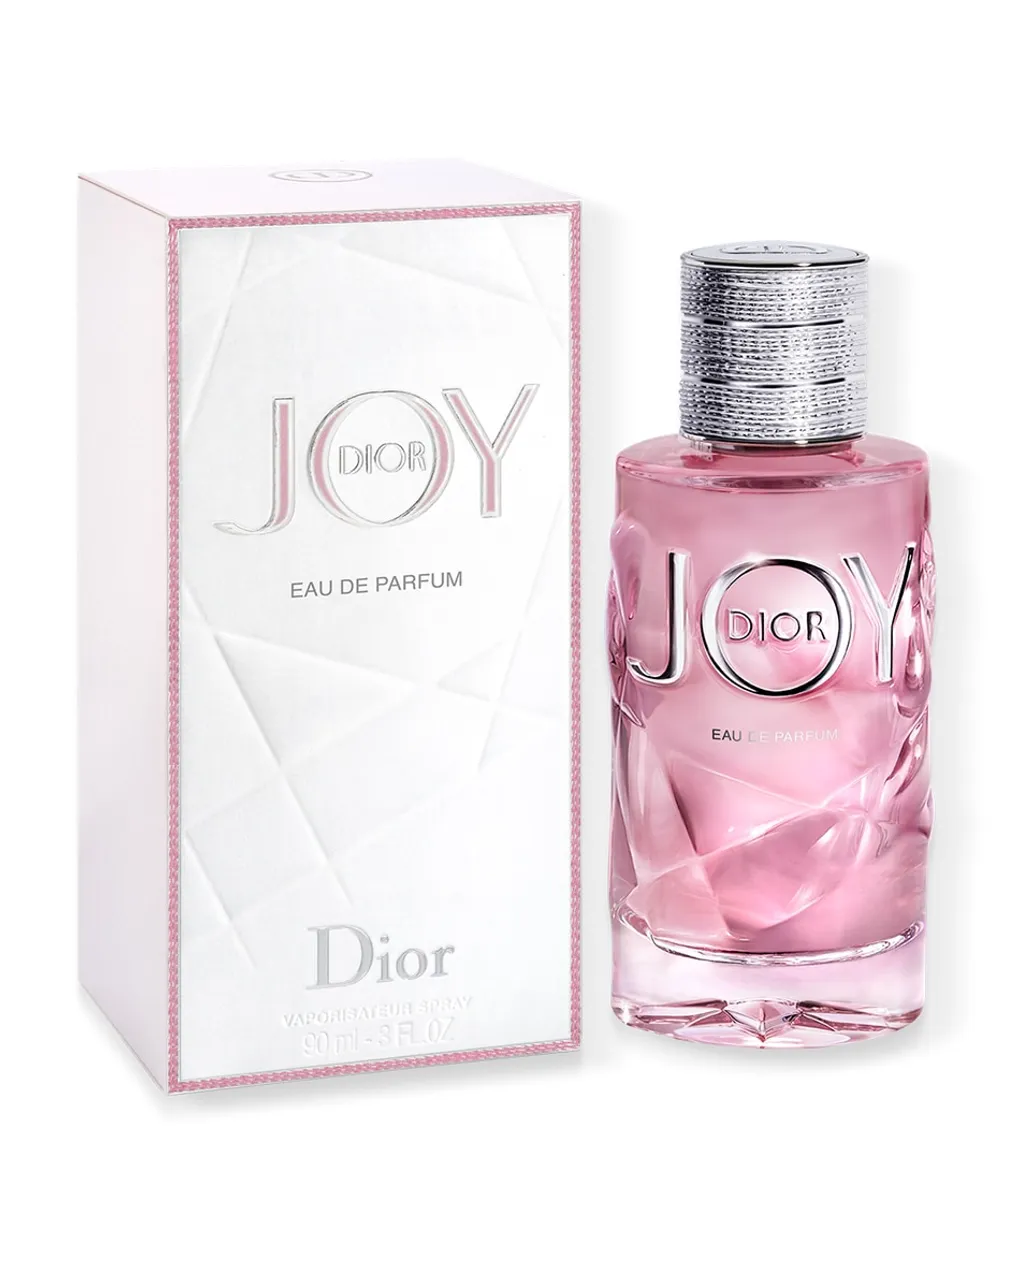 Dior Joy By Dior EAU DE PARFUM 90 ML